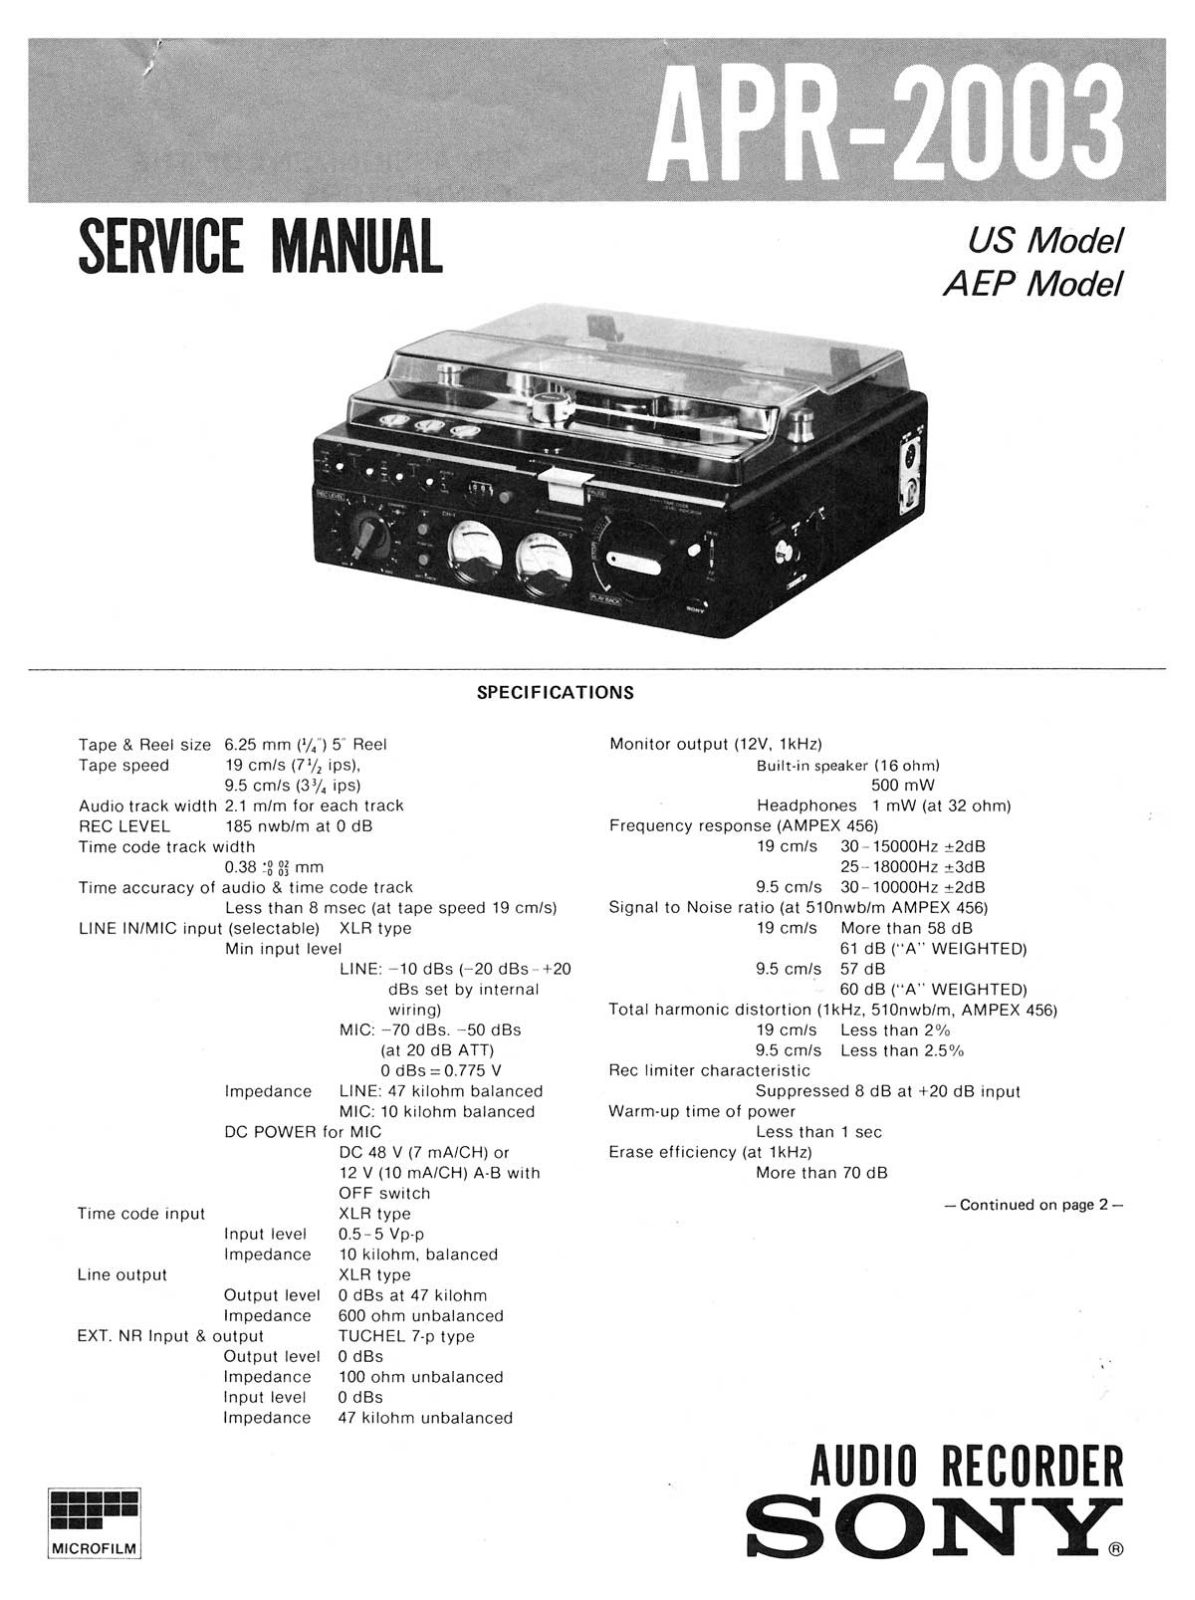 Sony APR-2003 Service manual